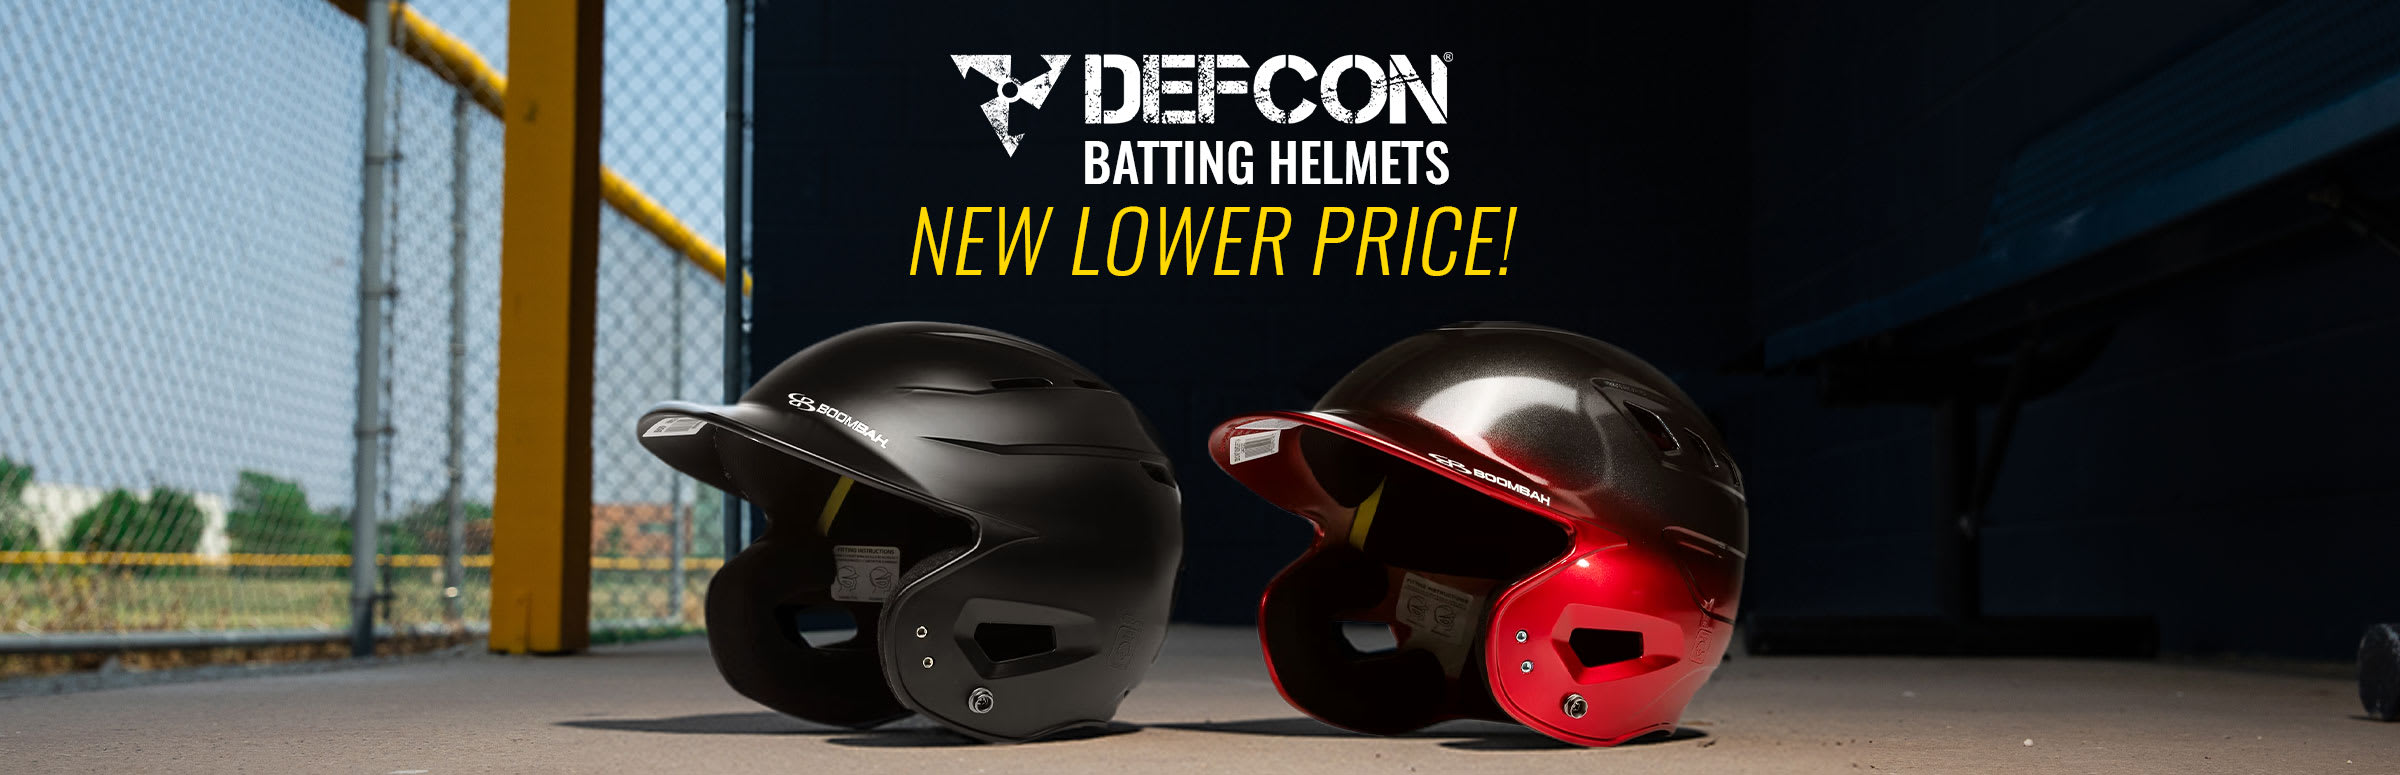 DEFCON Batting Helmets - New Lower Price